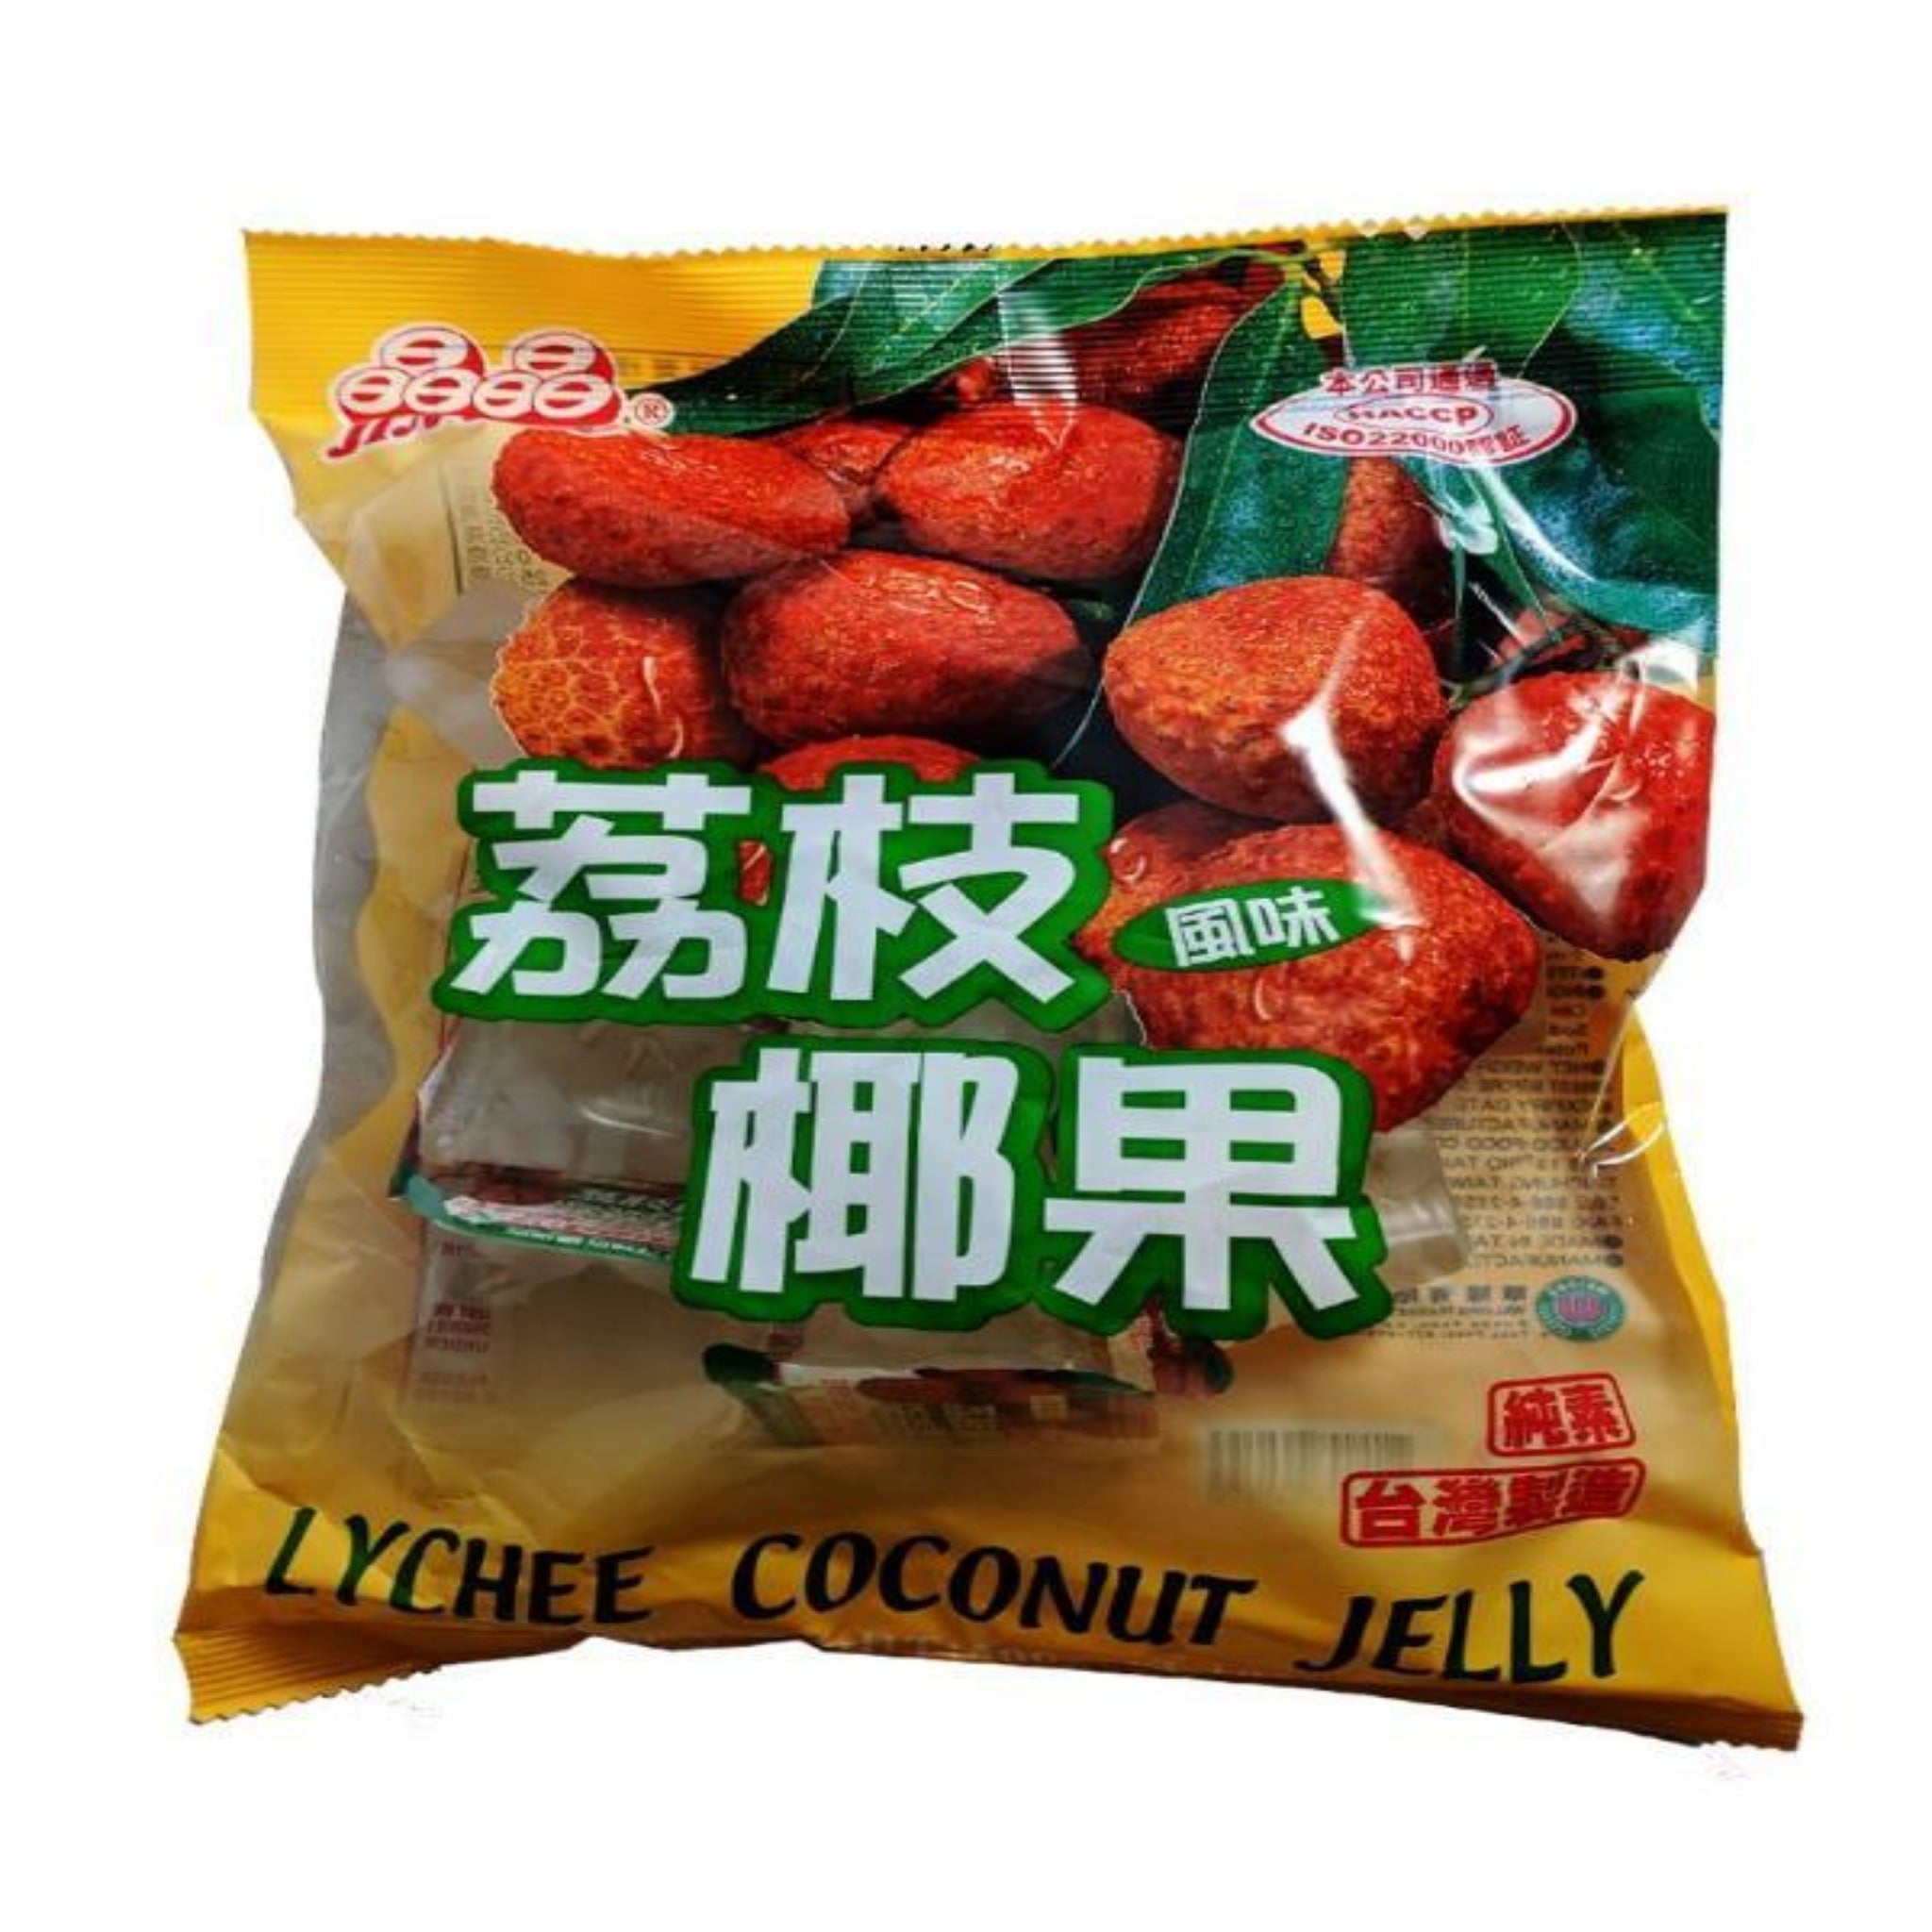 Jin Jin Coconut - Lychee Flavor 14.1oz - 晶晶 椰果果冻 - 荔枝口味 14.1oz